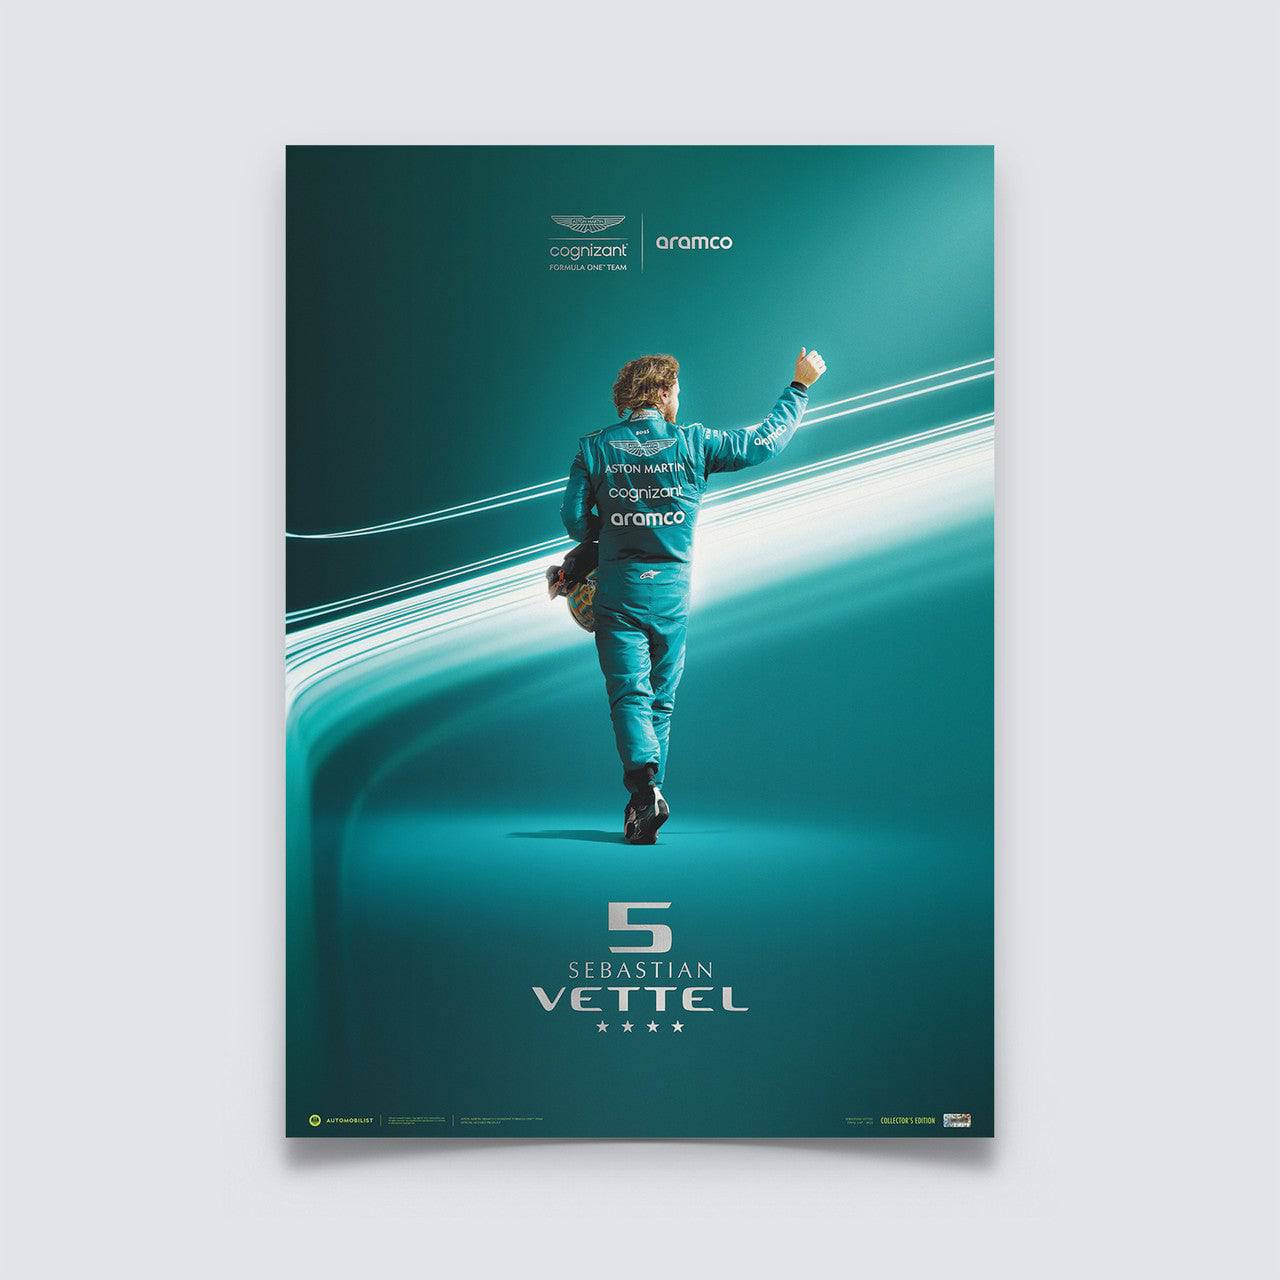 Aston Martin Aramco Cognizant Formula One™ Team -  Sebastian Vettel - Final Lap - 2022 | Collector's Edition